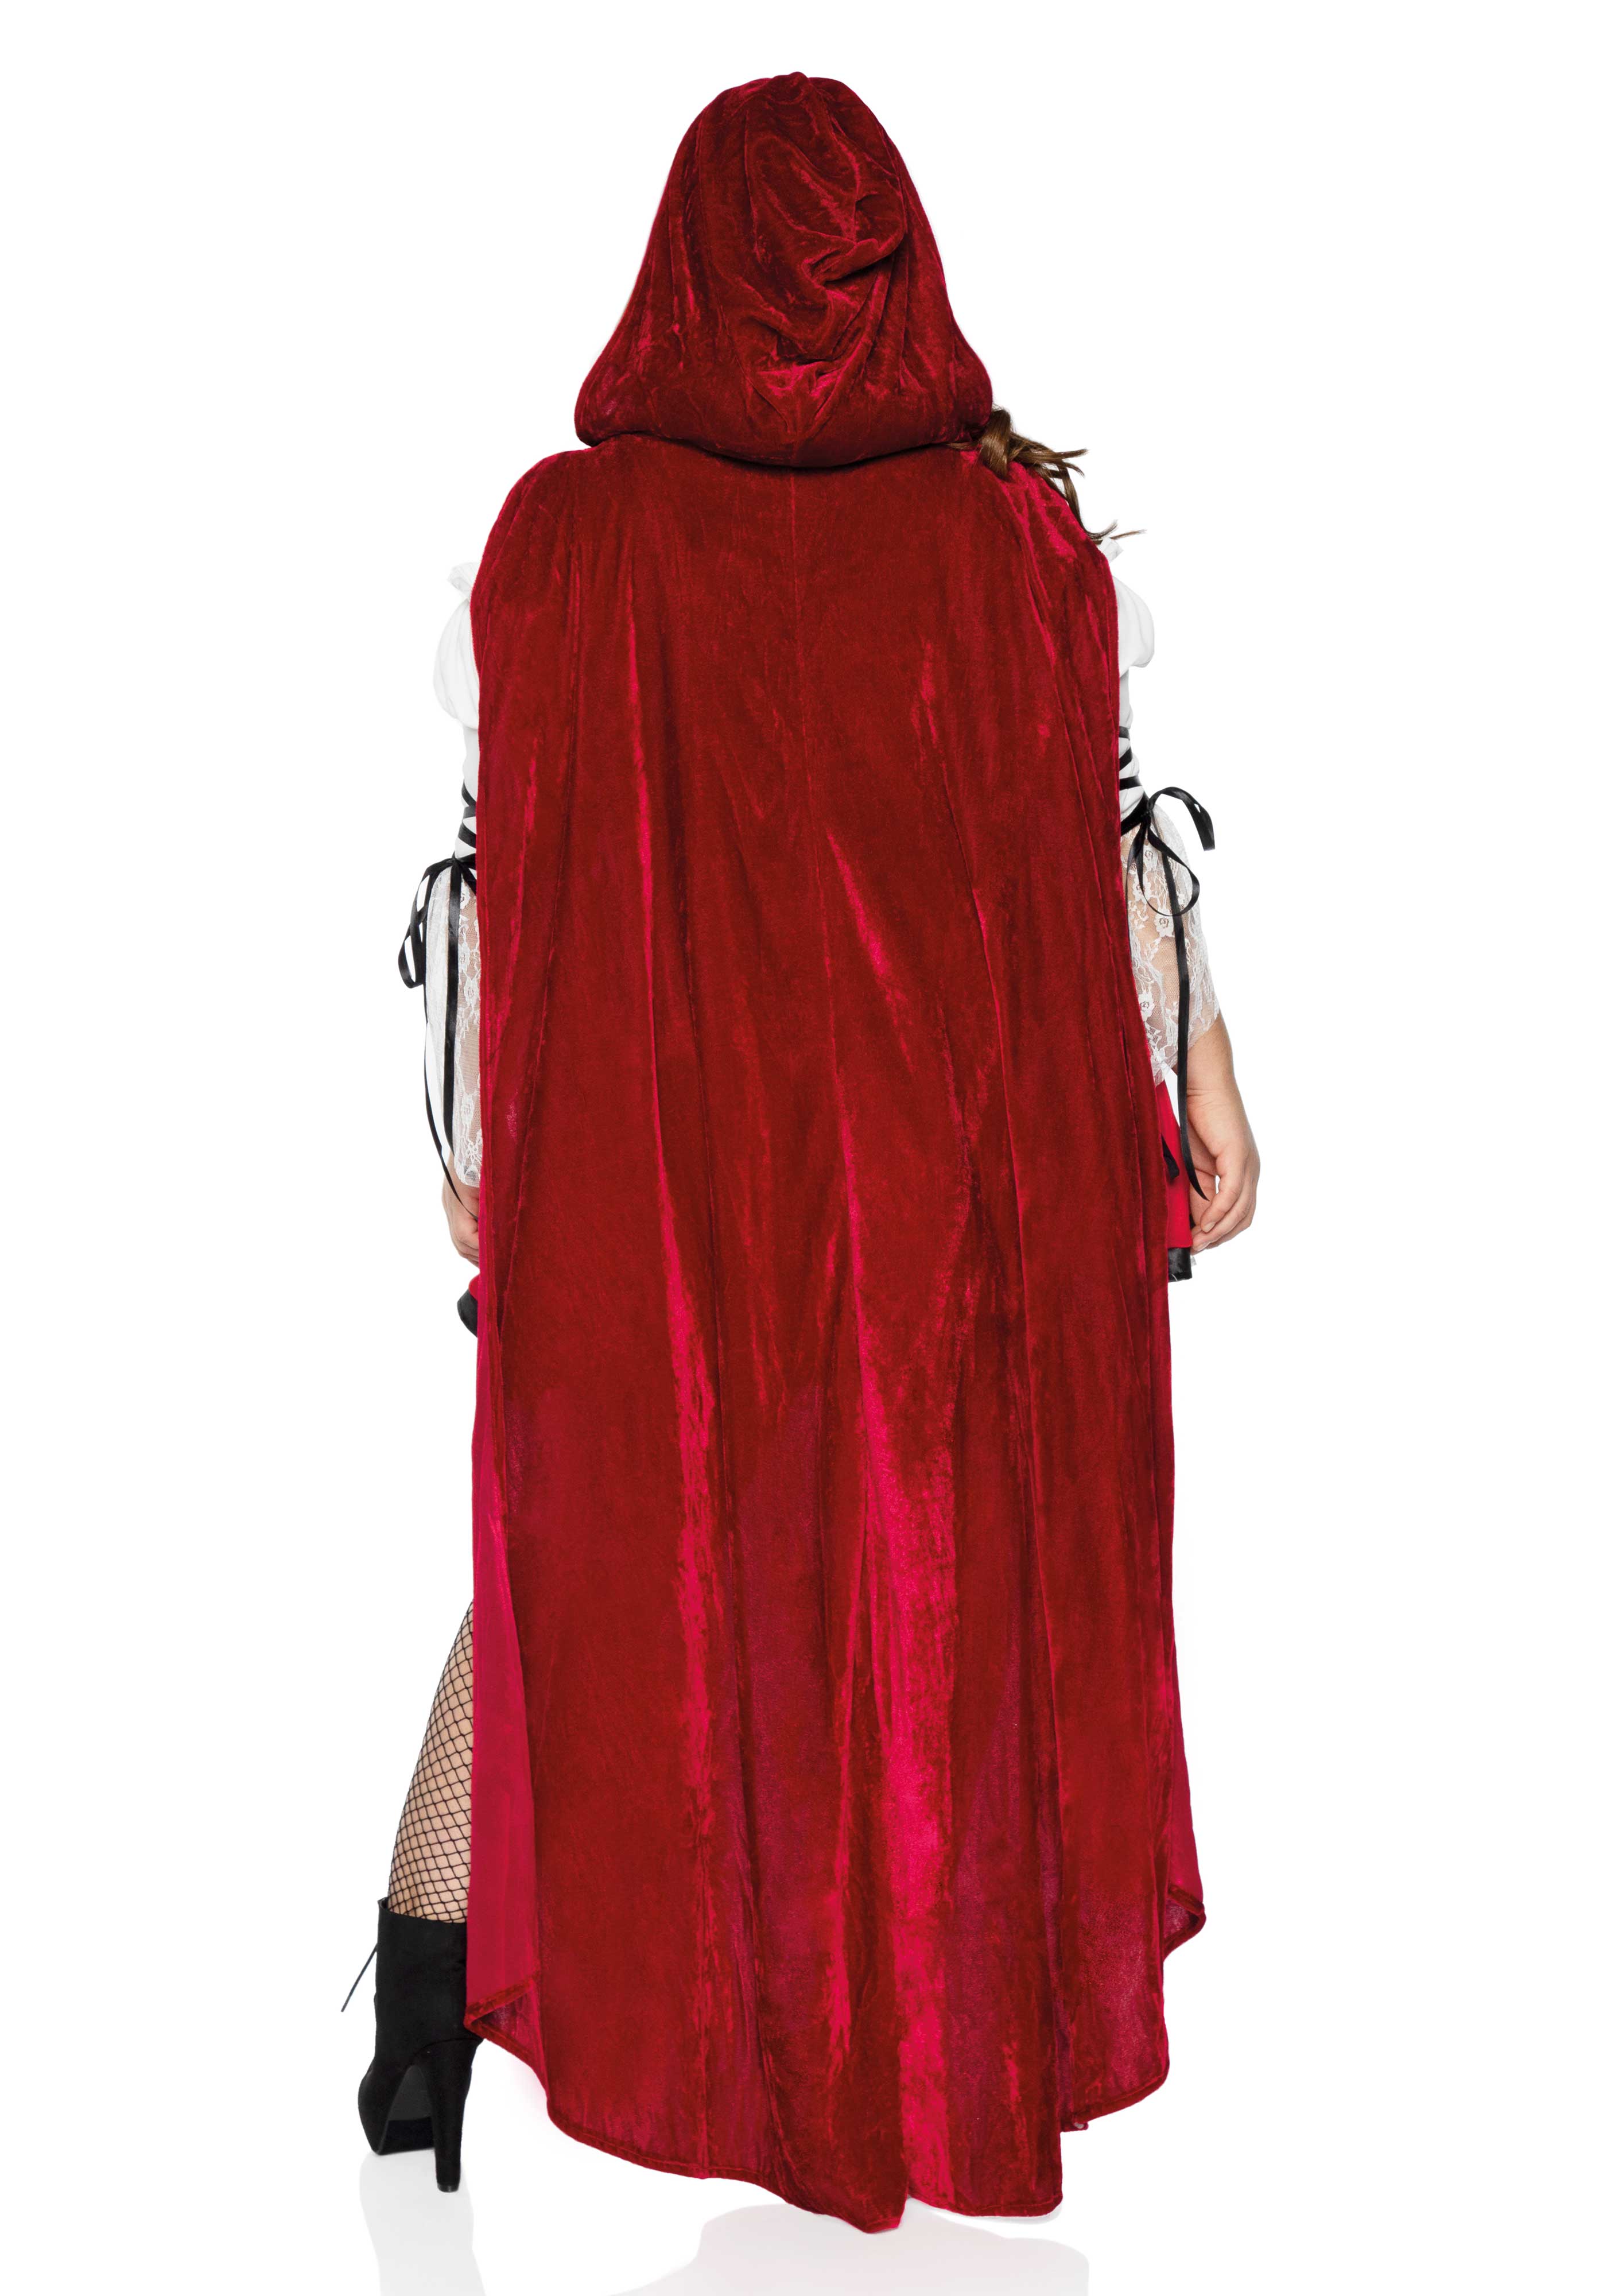 Leg Avenue 86905X Storybook Red Riding Hood Plus Size